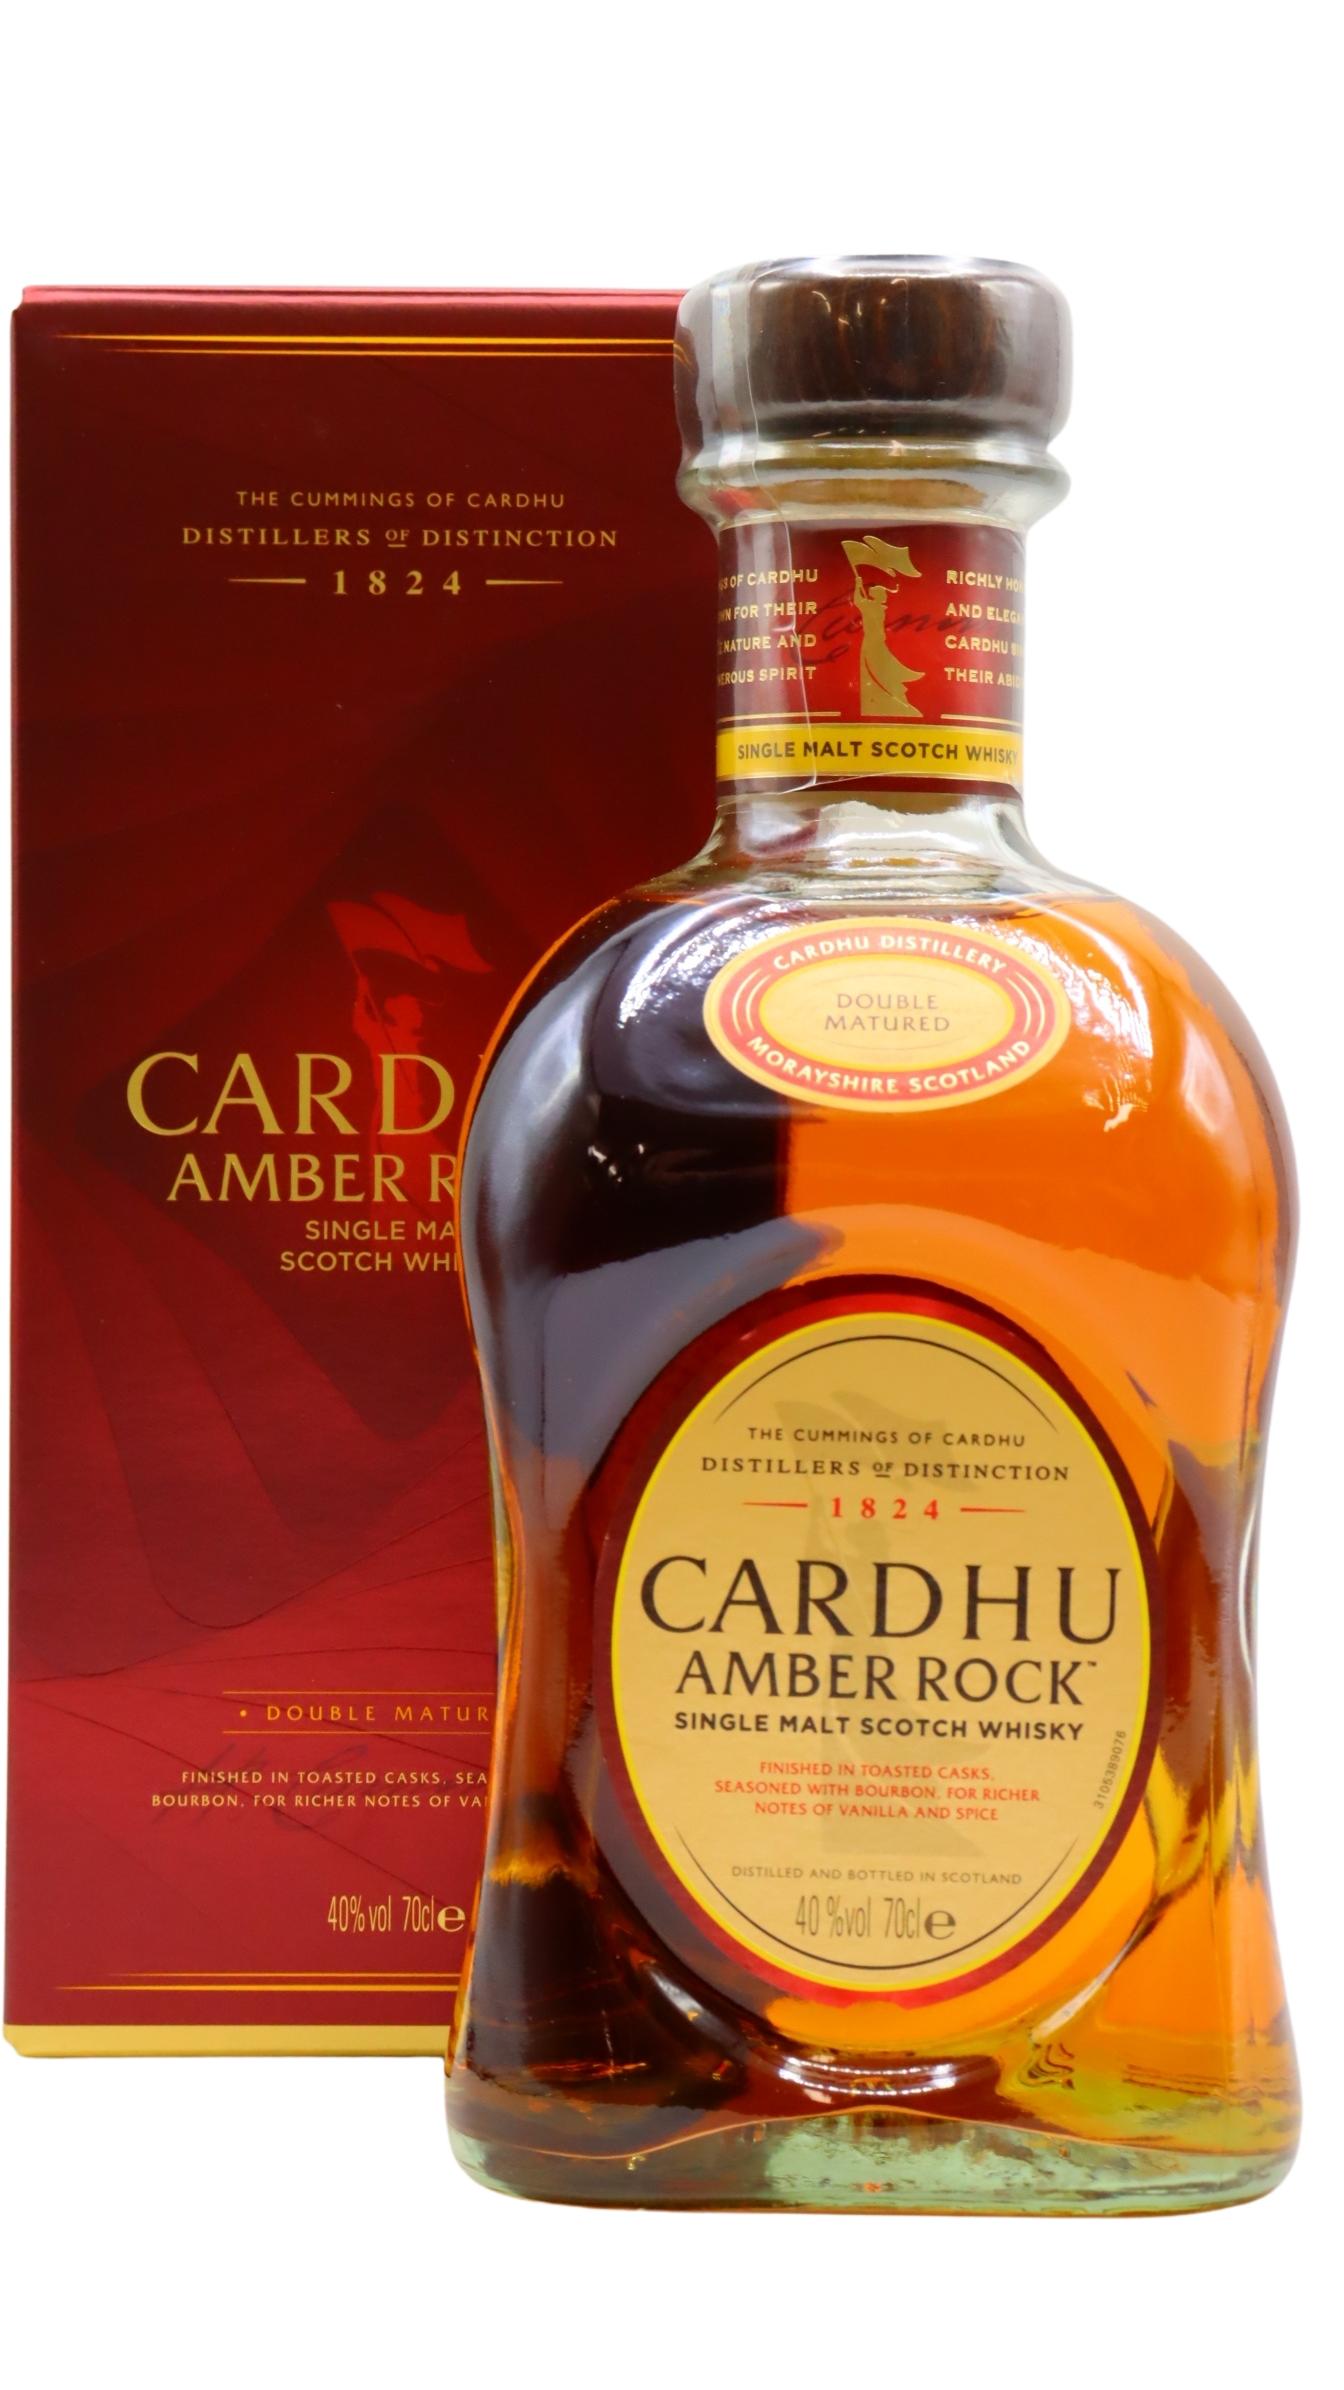 Cardhu - Amber Rock